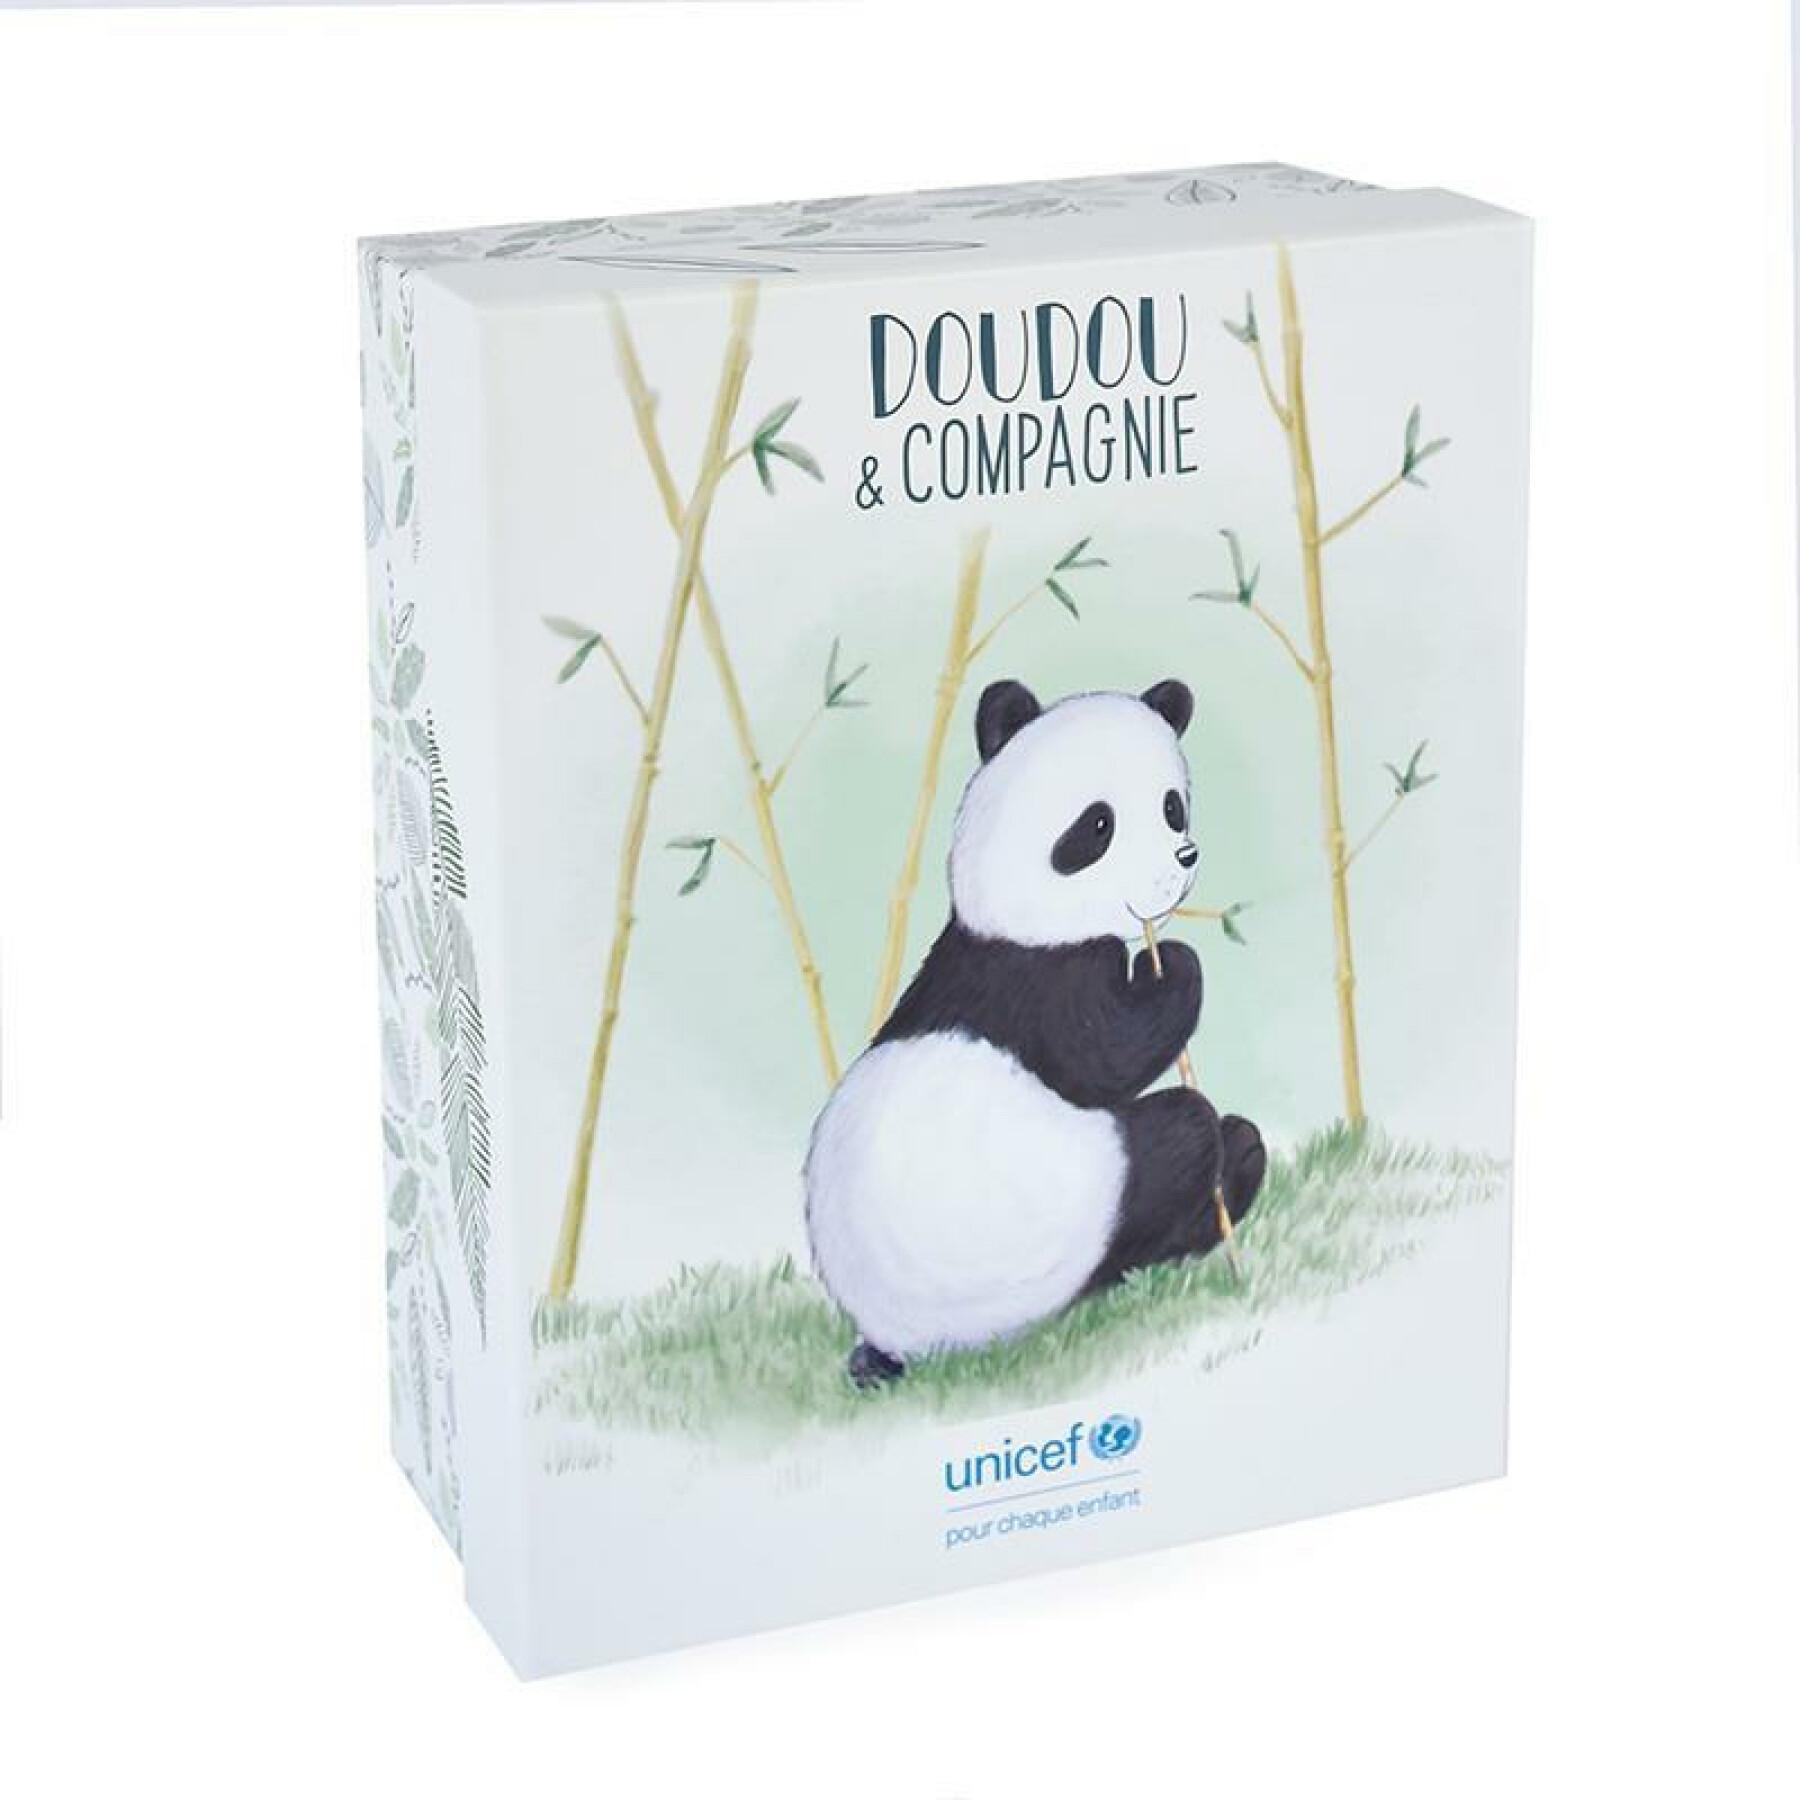 Pelúcia Doudou & compagnie Unicef - Panda & Bébé